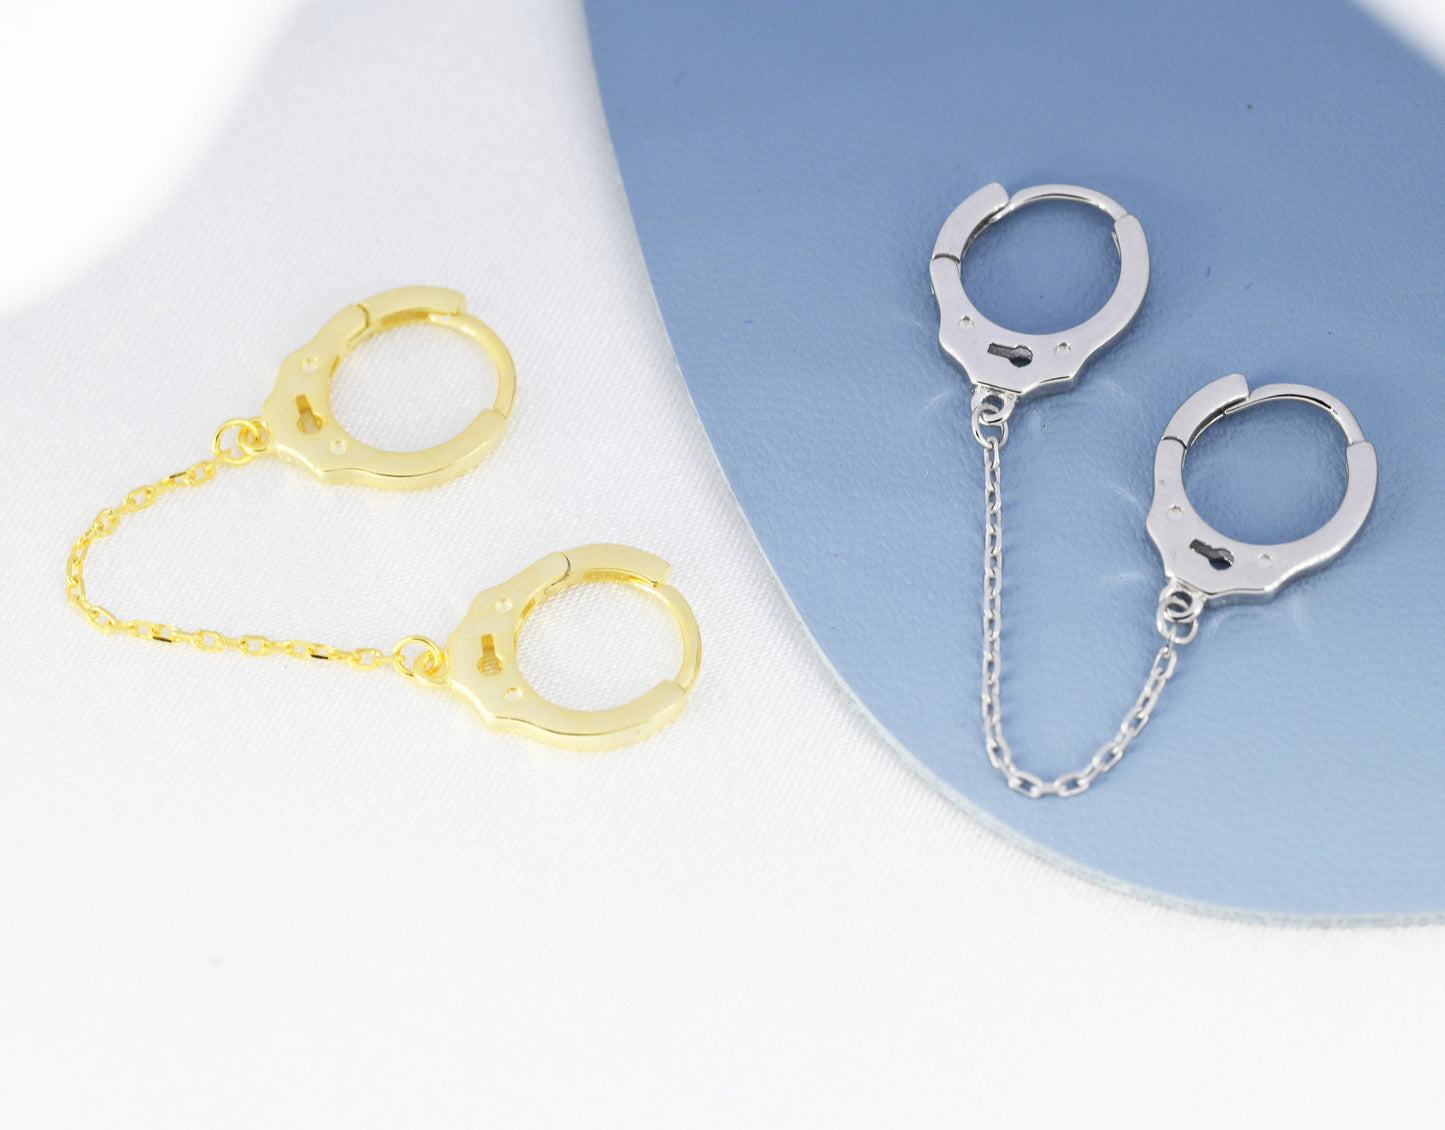 Handcuff Hoop Earrings with a Linking Chain, Silver or Gold, Chained  Hoop Earrings, Linked Hoops, Linked Hoops, Double Piercing Earrings